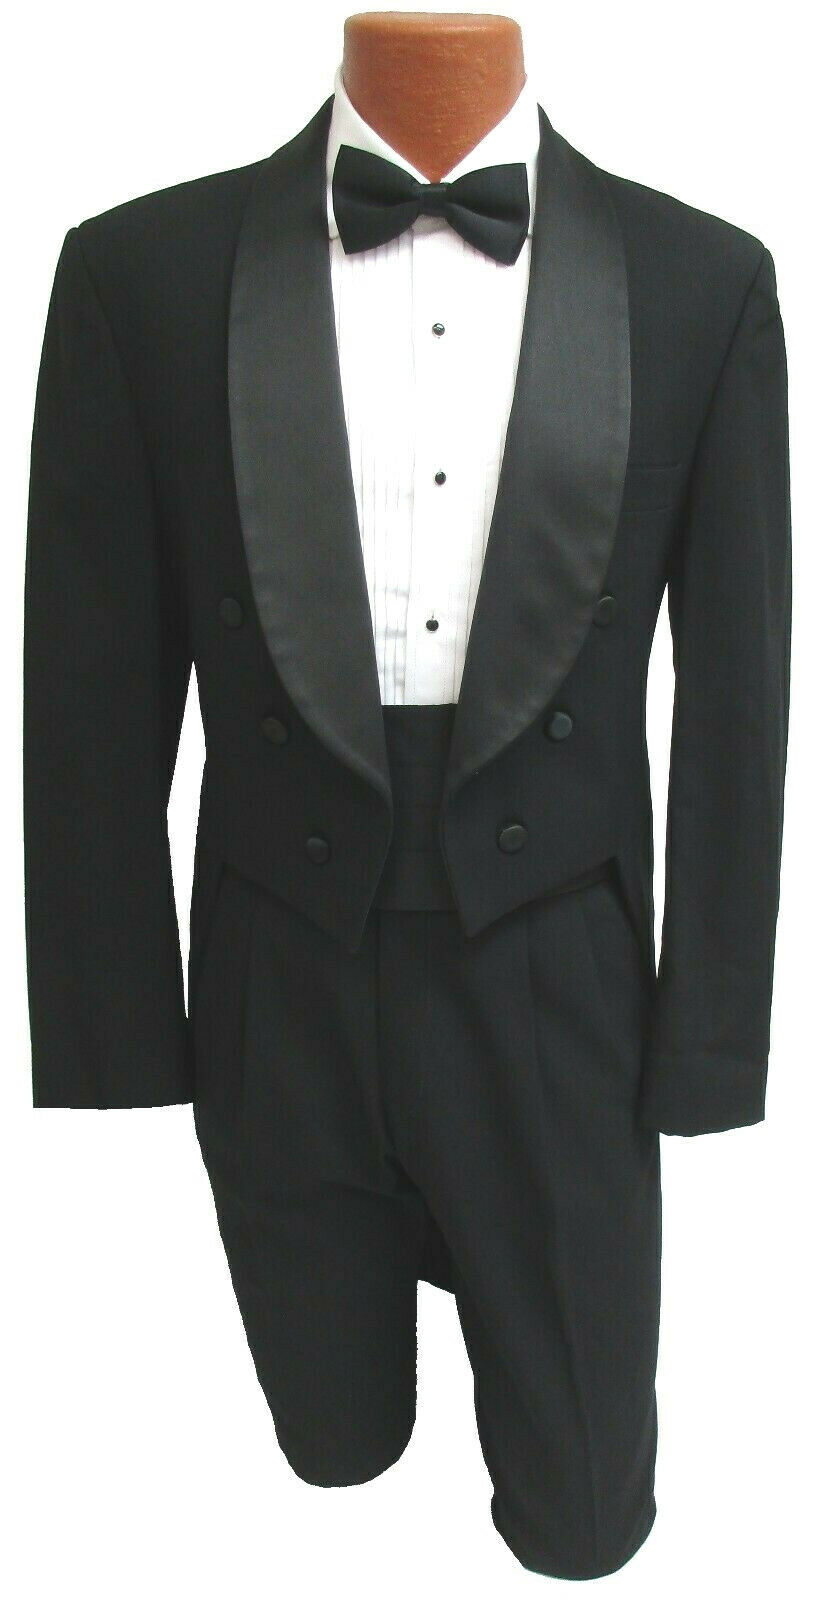 Men's Black Tuxedo Tailcoat Fulldress 6 Button Shawl Lapel Jacket Tux Tails Coat